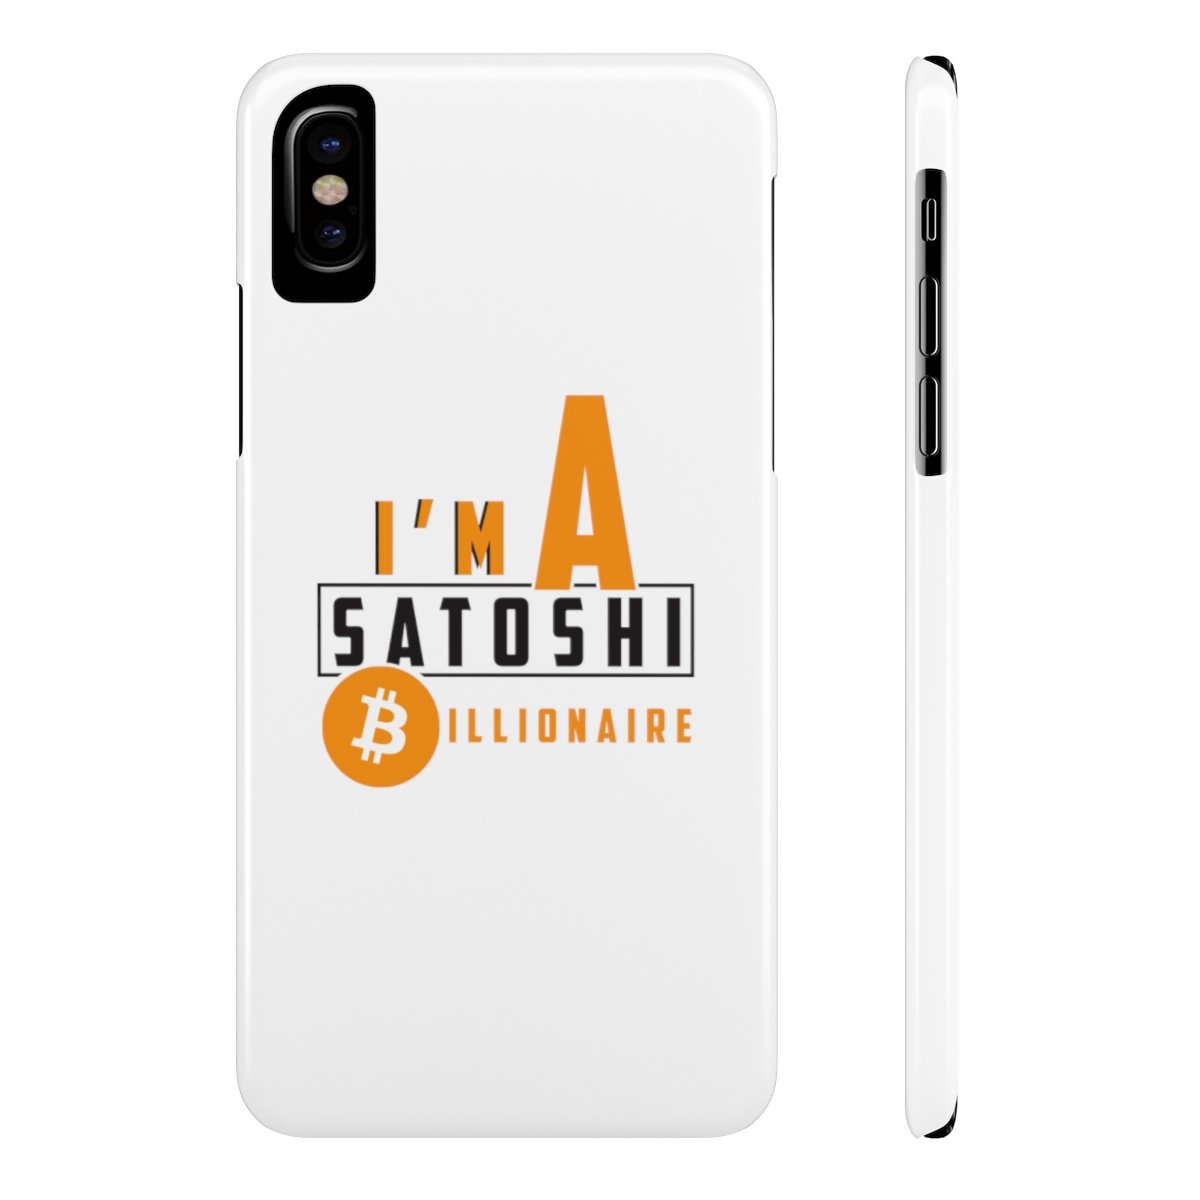 I'm a satoshi billionaire - Case Mate Slim Phone Cases TCP1607 iPhone X Slim Official Crypto  Merch